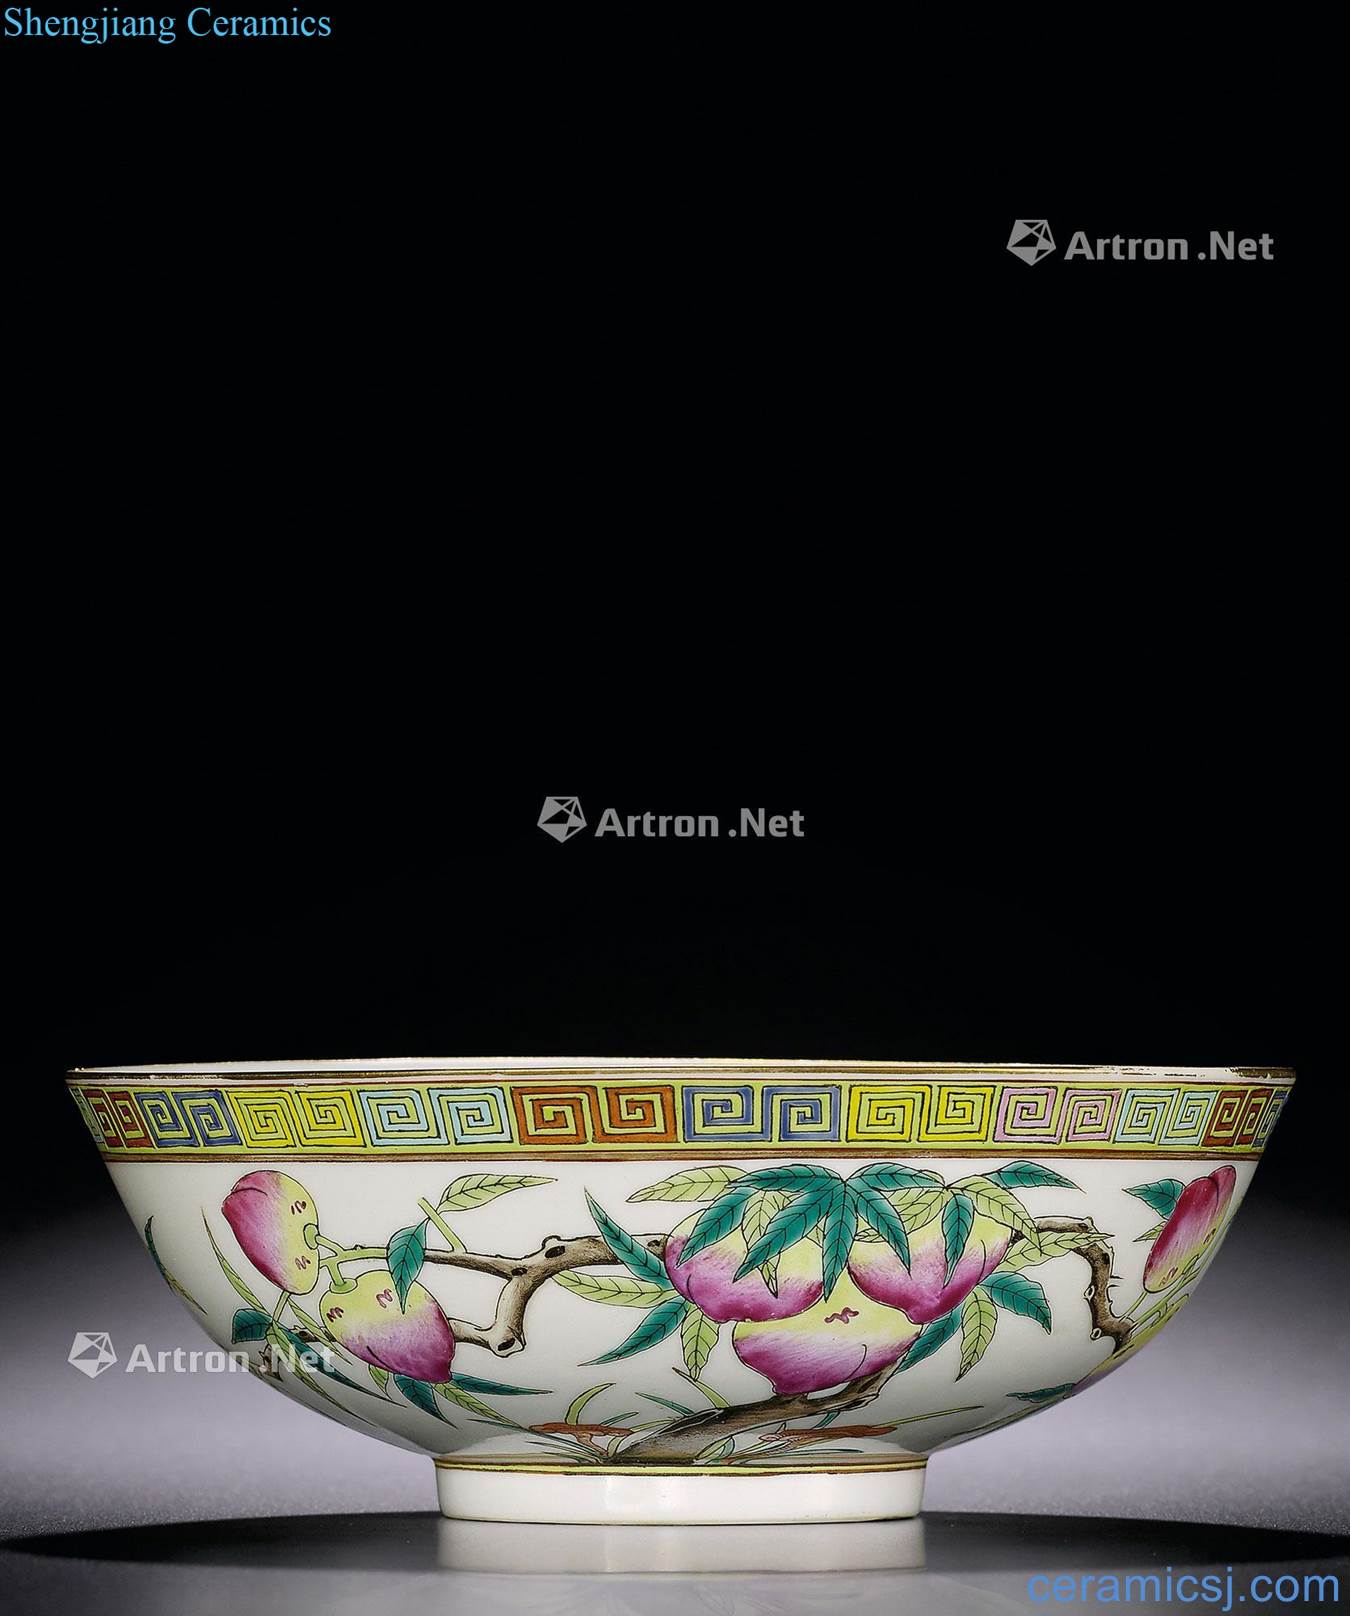 Pastel reign of qing emperor guangxu live live bowl